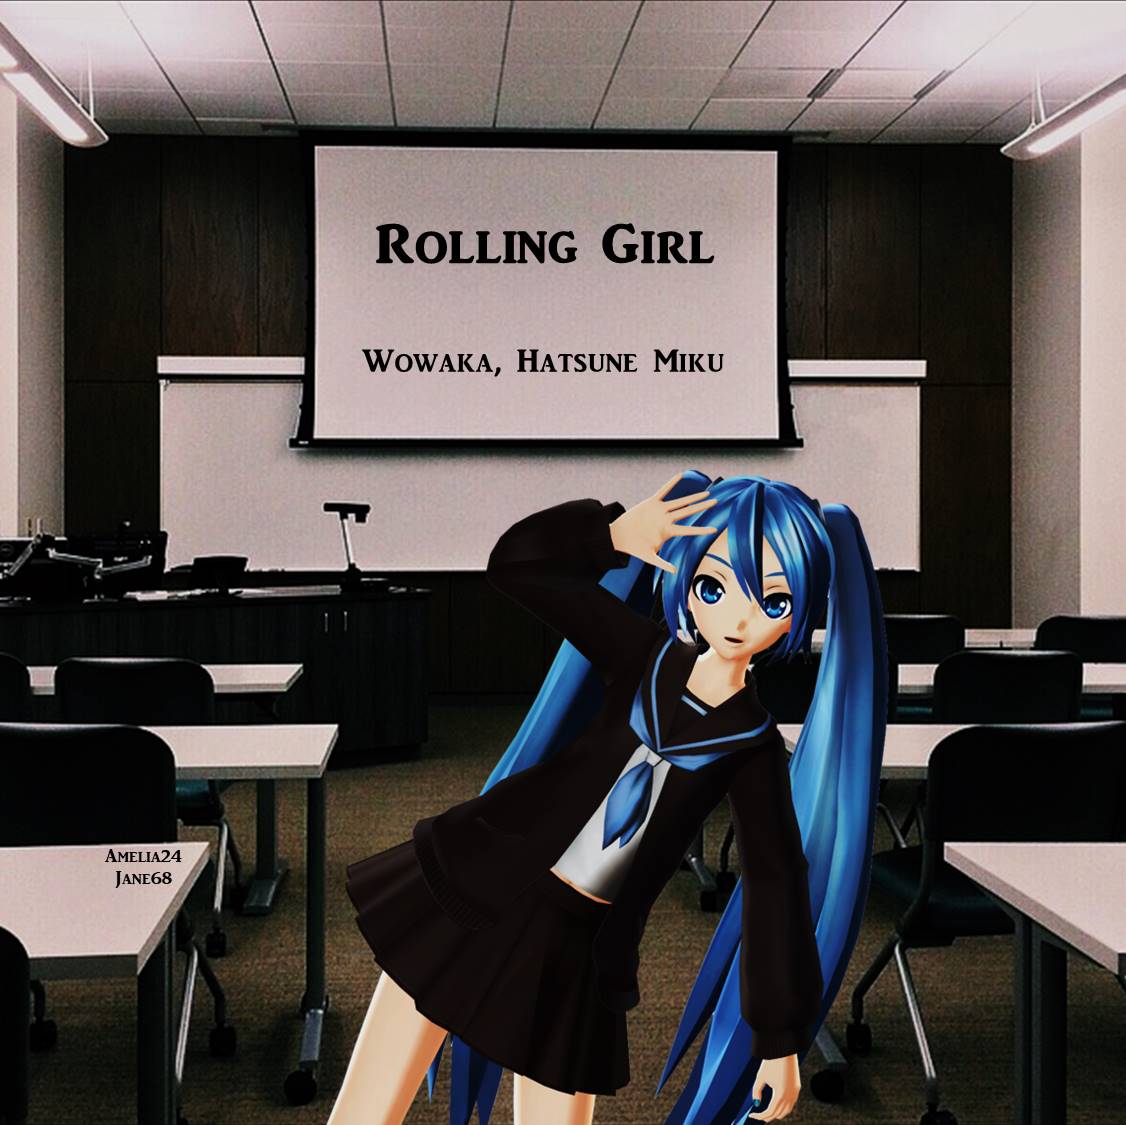  Rolling Girl bởi Wowaka, Hatsune Miku